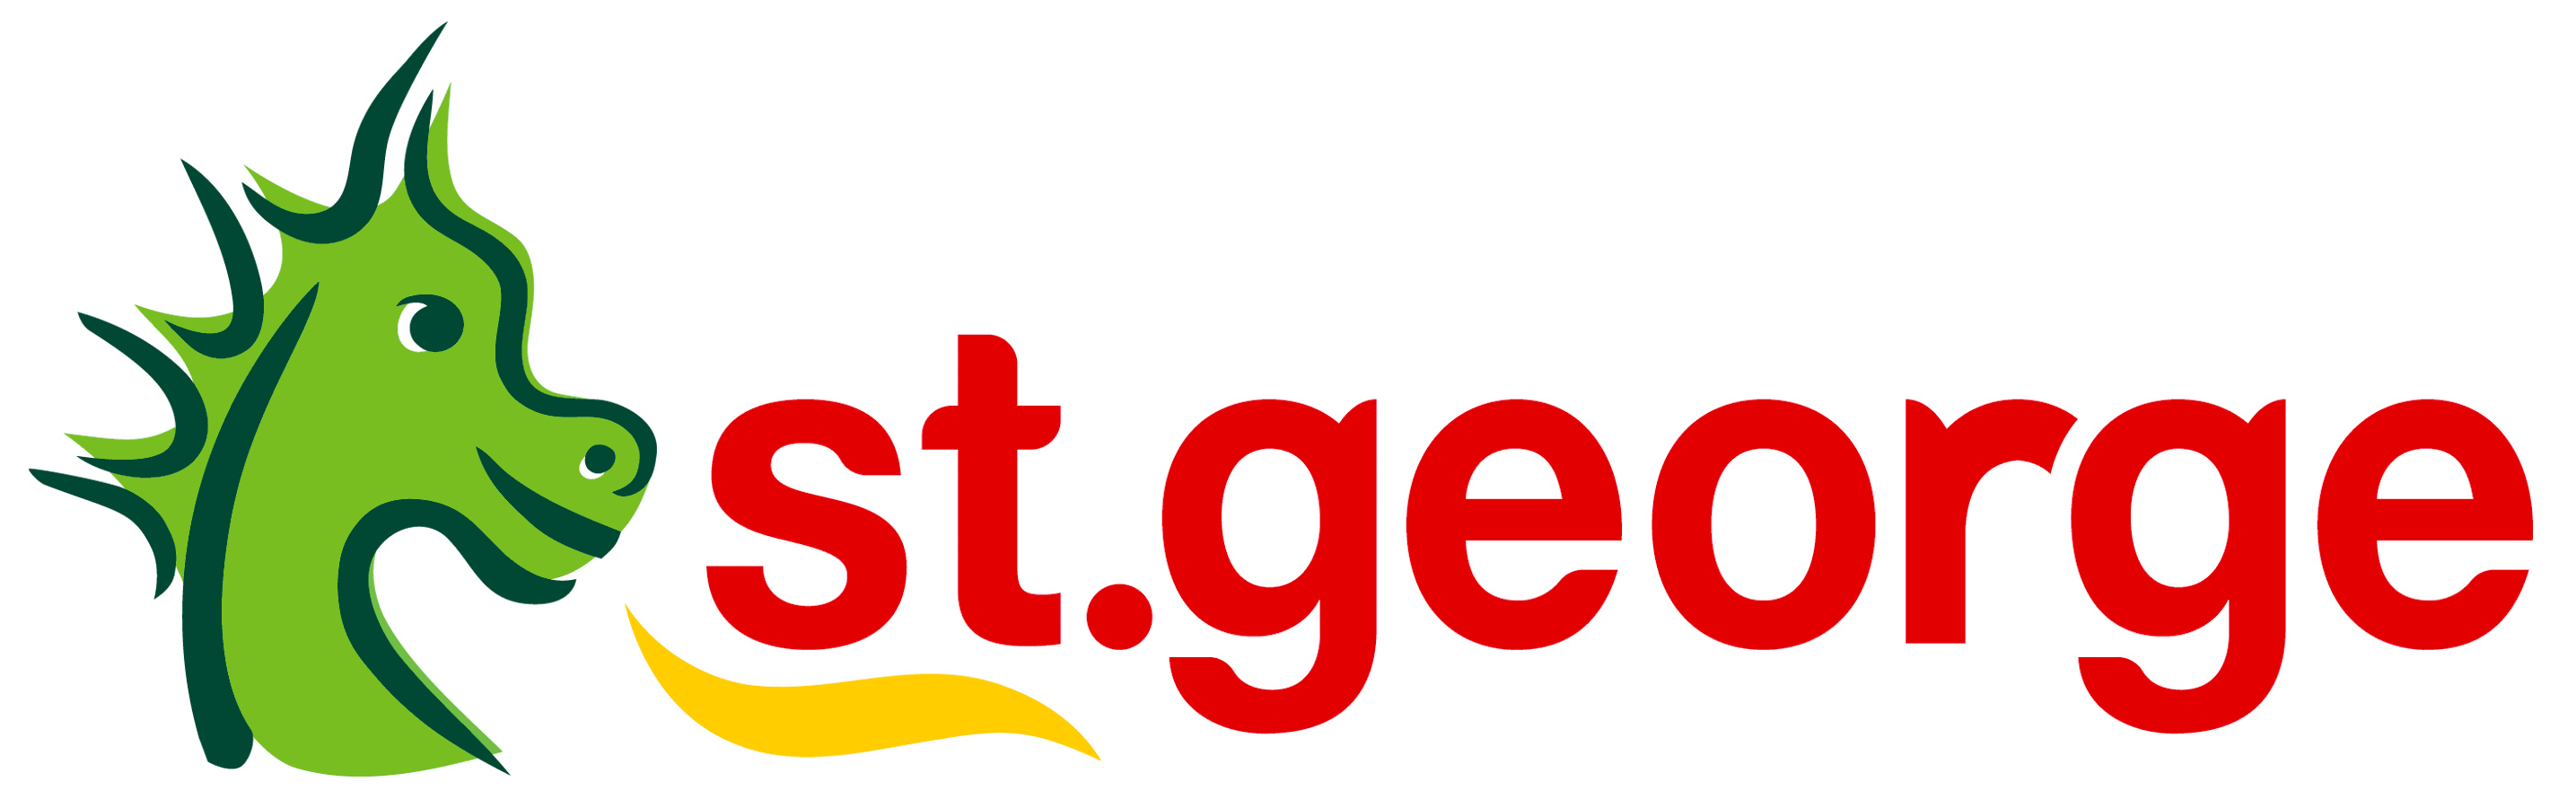 St George Bank Logo Png